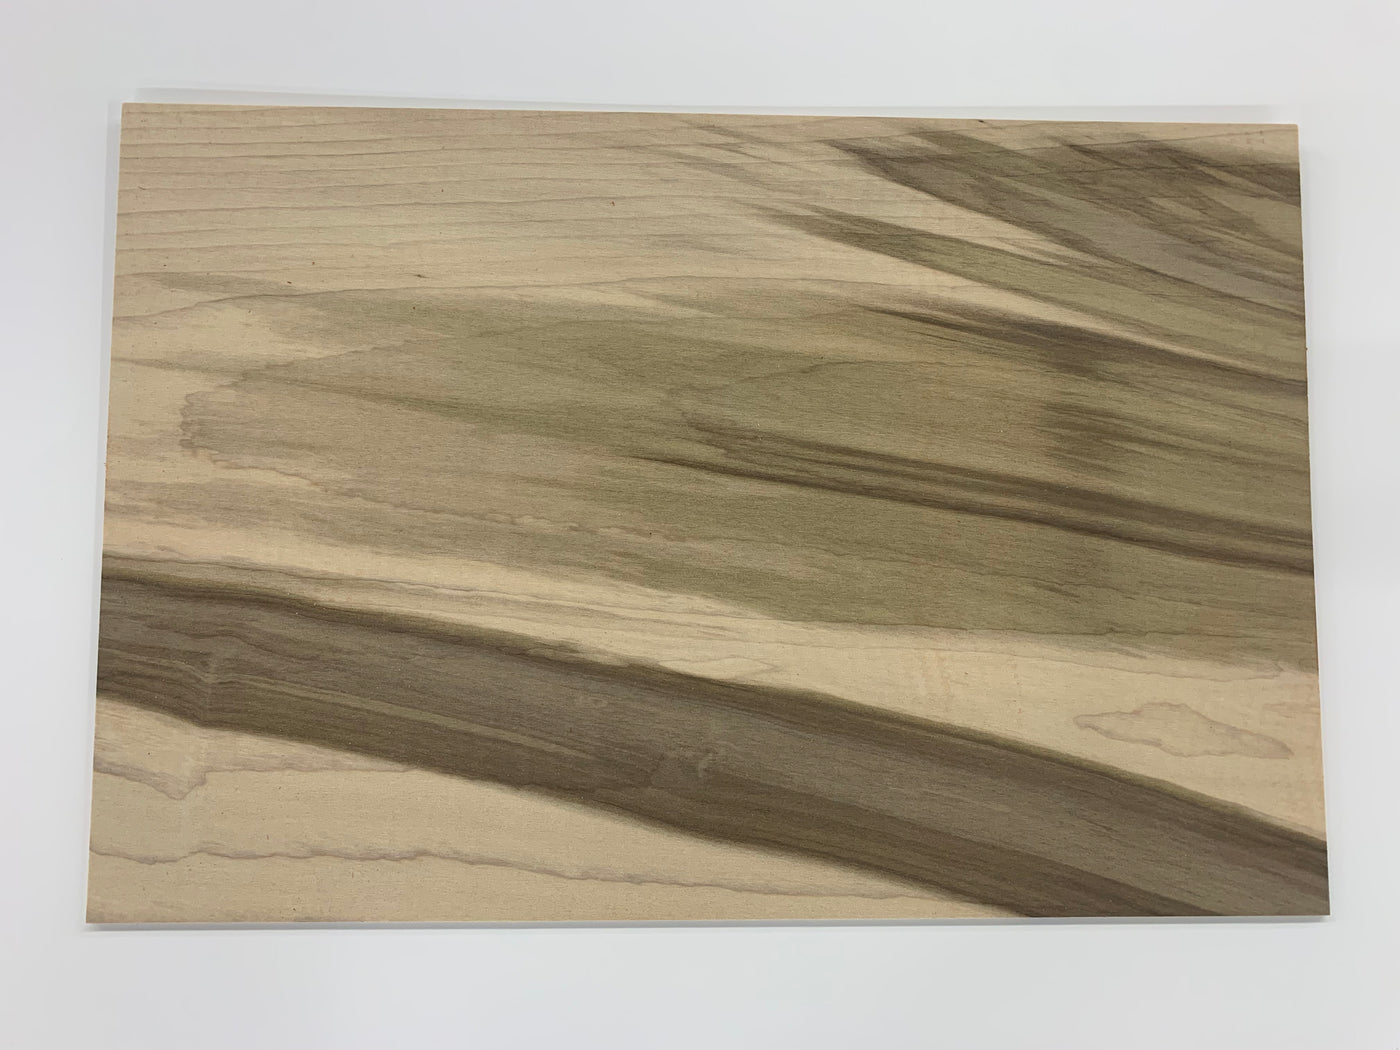 White Poplar TimberThins® 12.75 x 19" x .125" thick.  Sanded